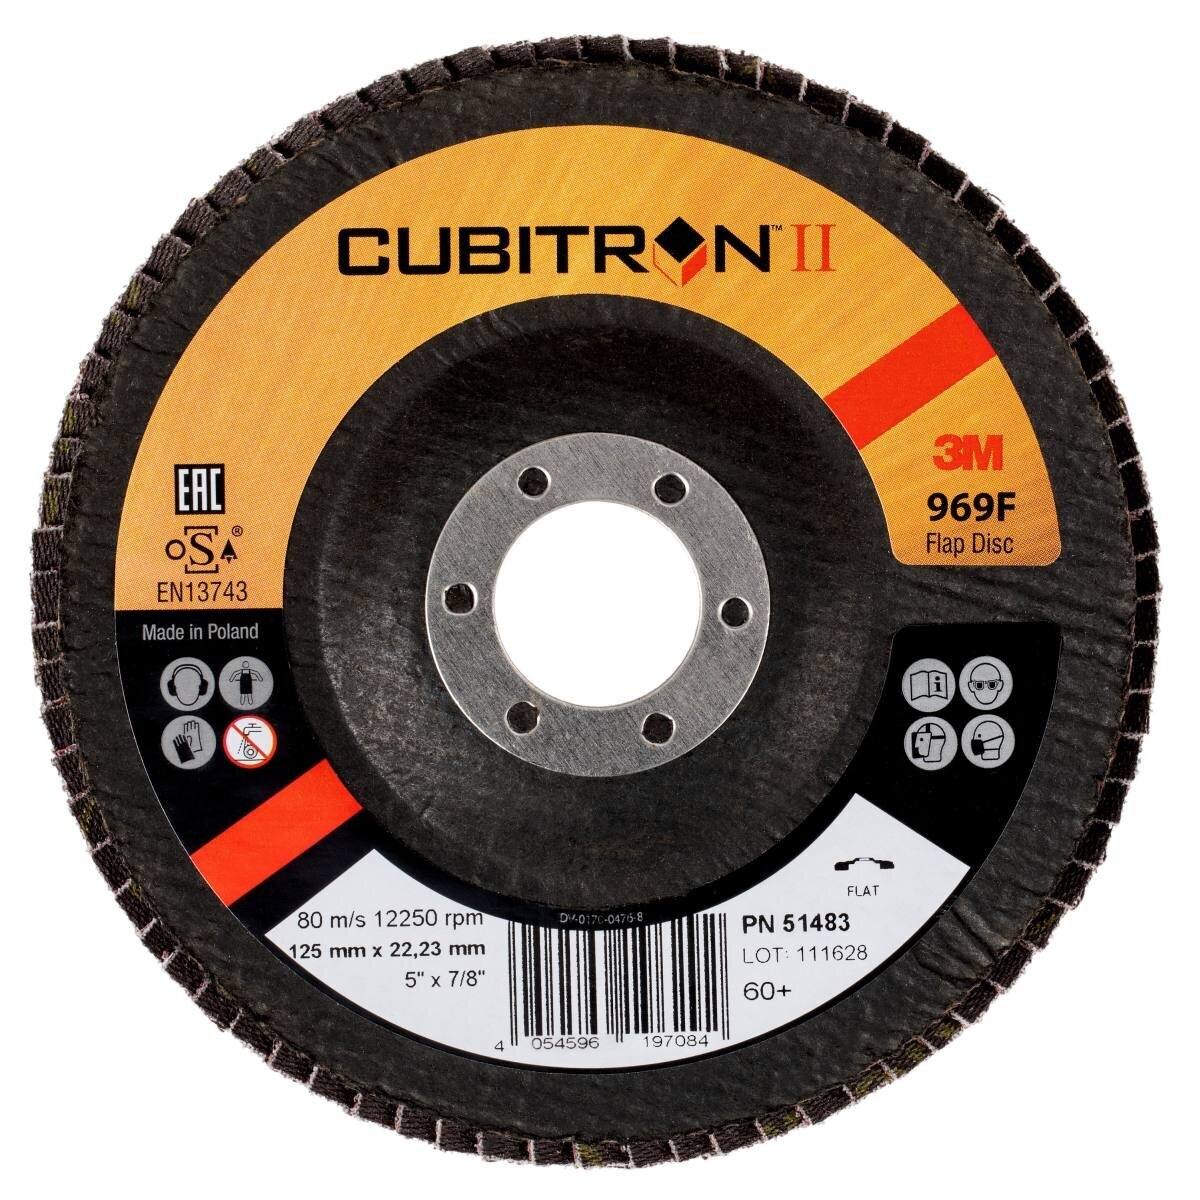 3M 969F Cubitron II flap discs d=125mm P60+ #51483 flat